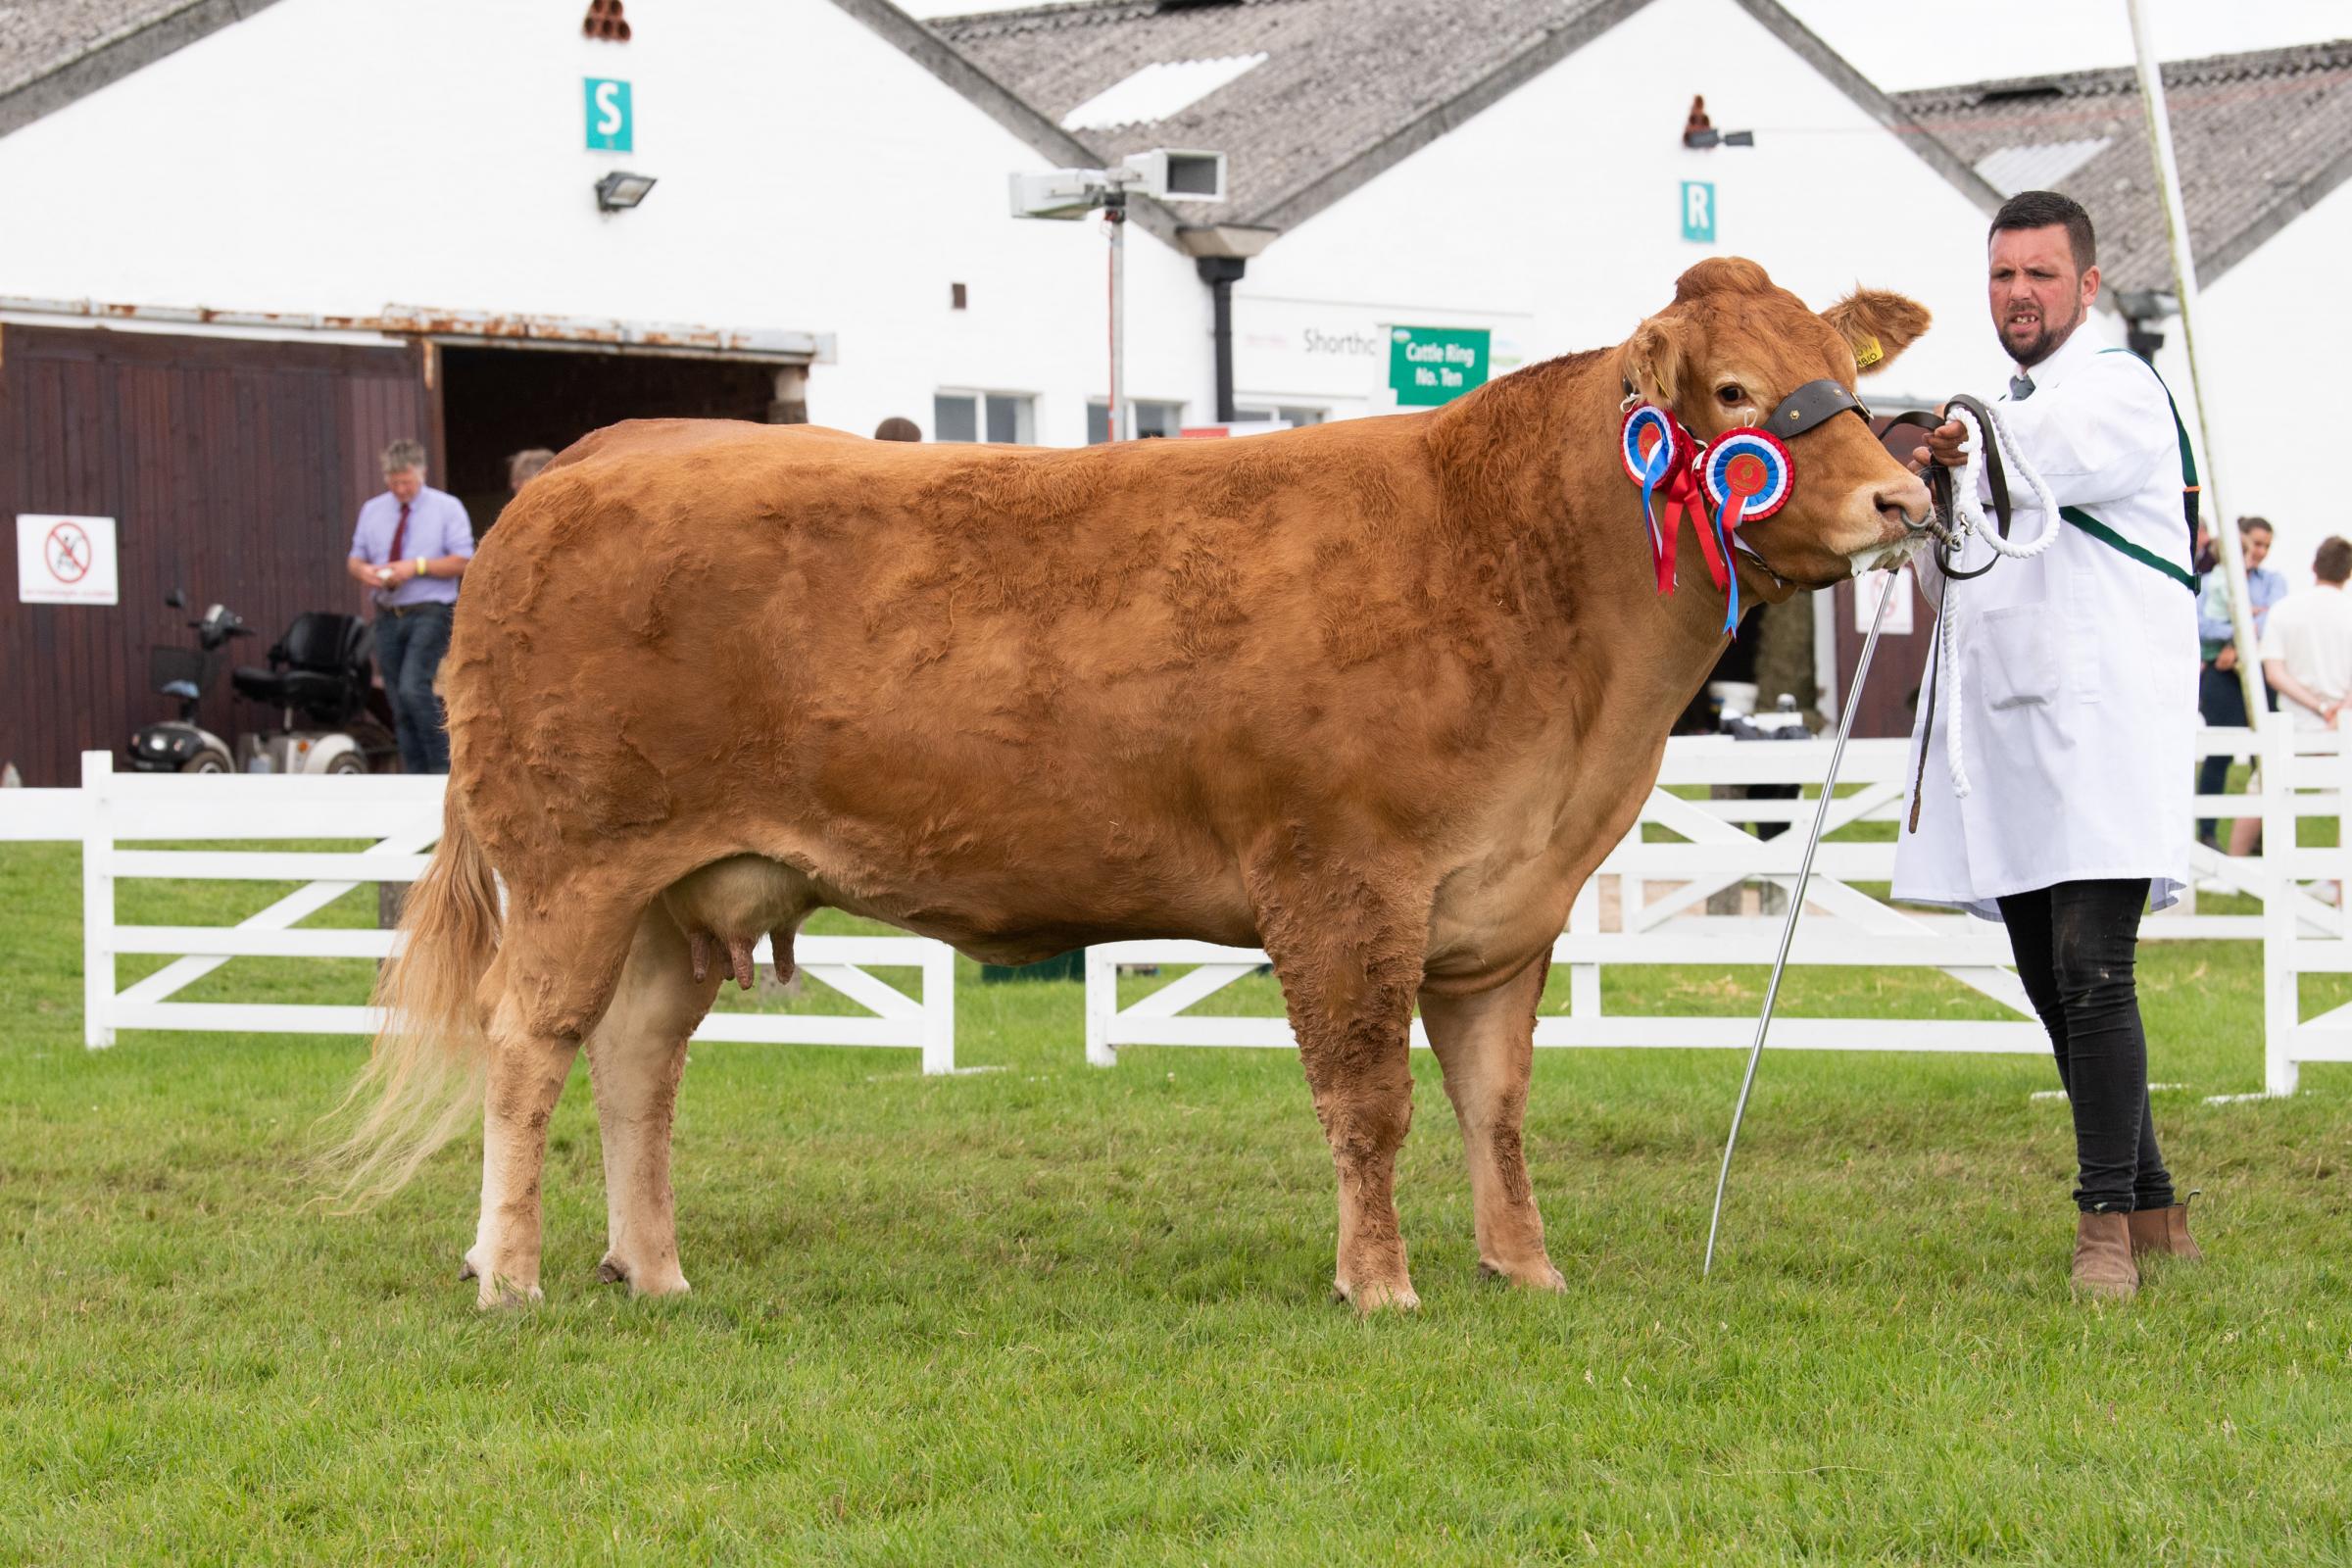 Limousin champion came from Jenkinson Farms Ref:RH150721070 Rob Haining / The Scottish Farmer...